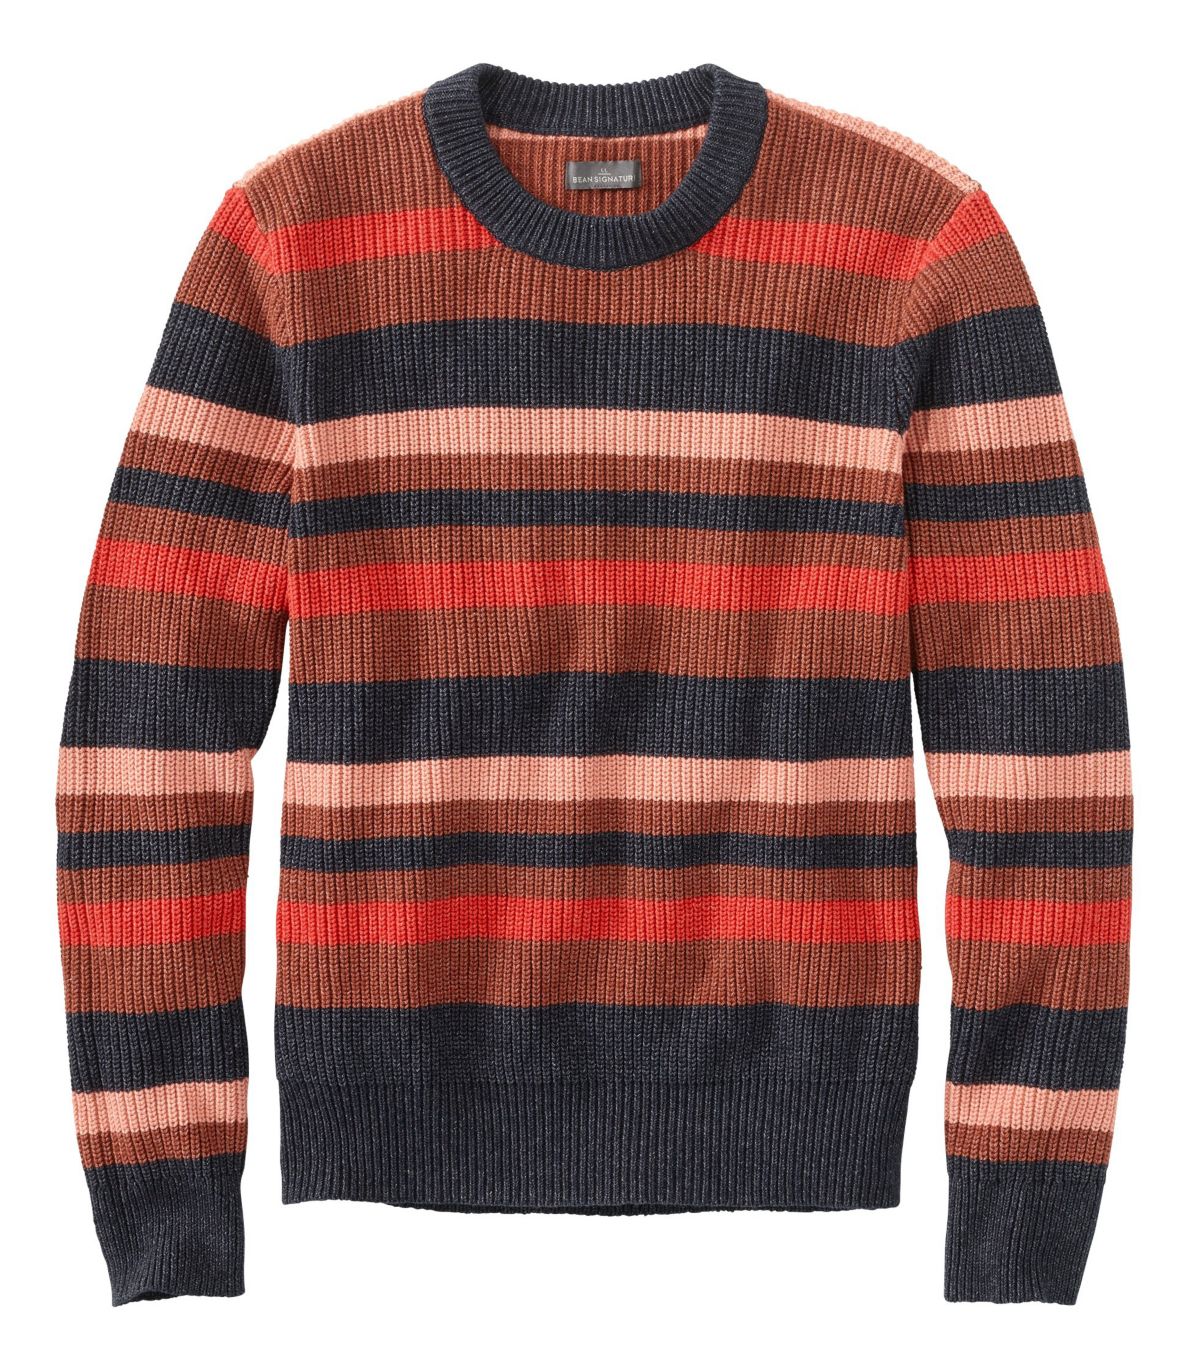 Men's Signature Shaker Stitch Sweater, Crewneck, Stripe at L.L. Bean